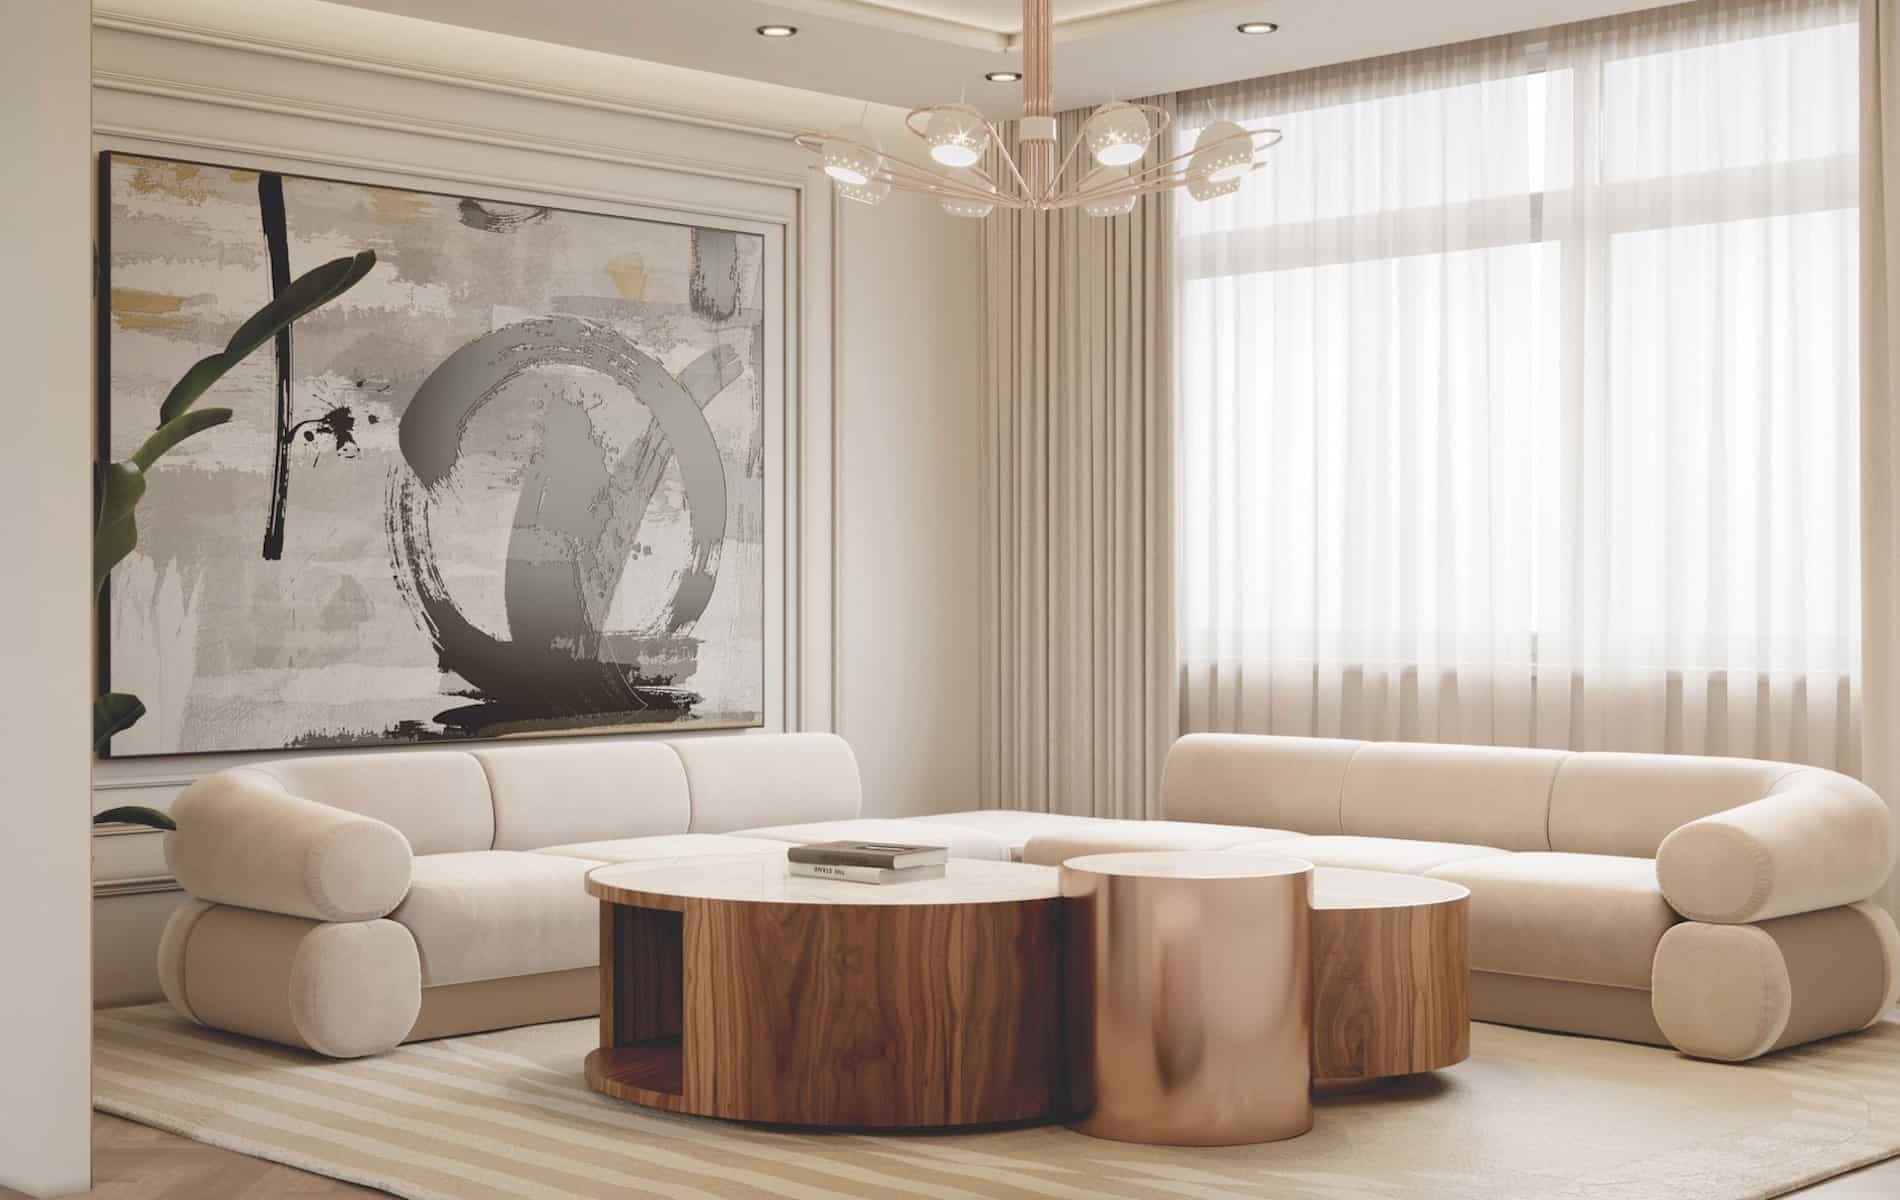 A LUXURY MODERN INTERIOR DESIGN  Modern Furniture by Caffe Latte Home